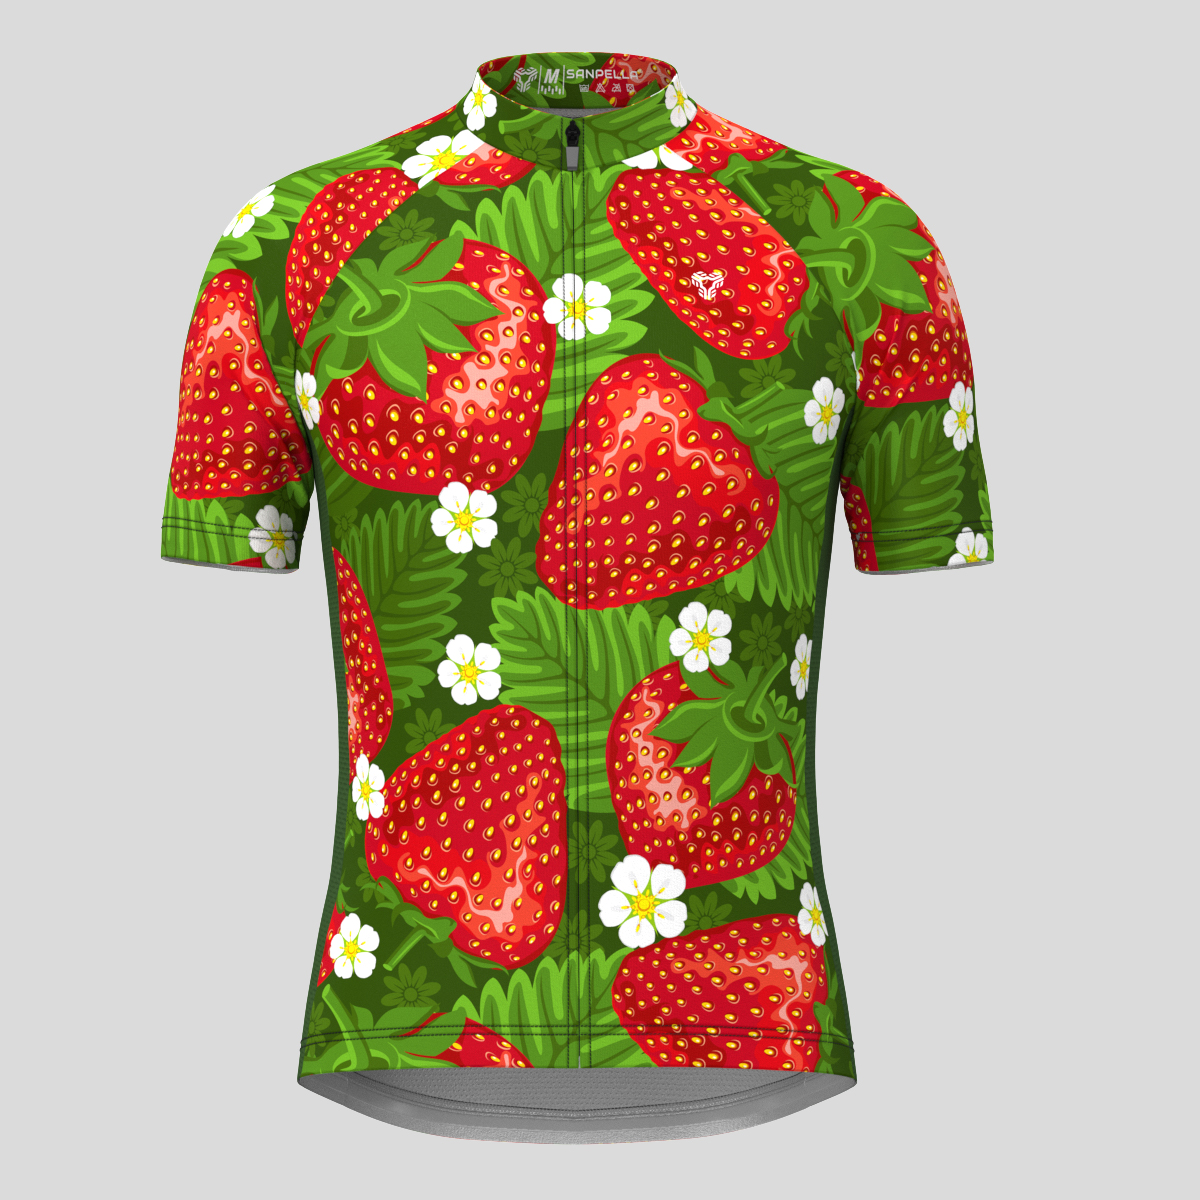 Strawberry Novelty Men's Cycling Jersey